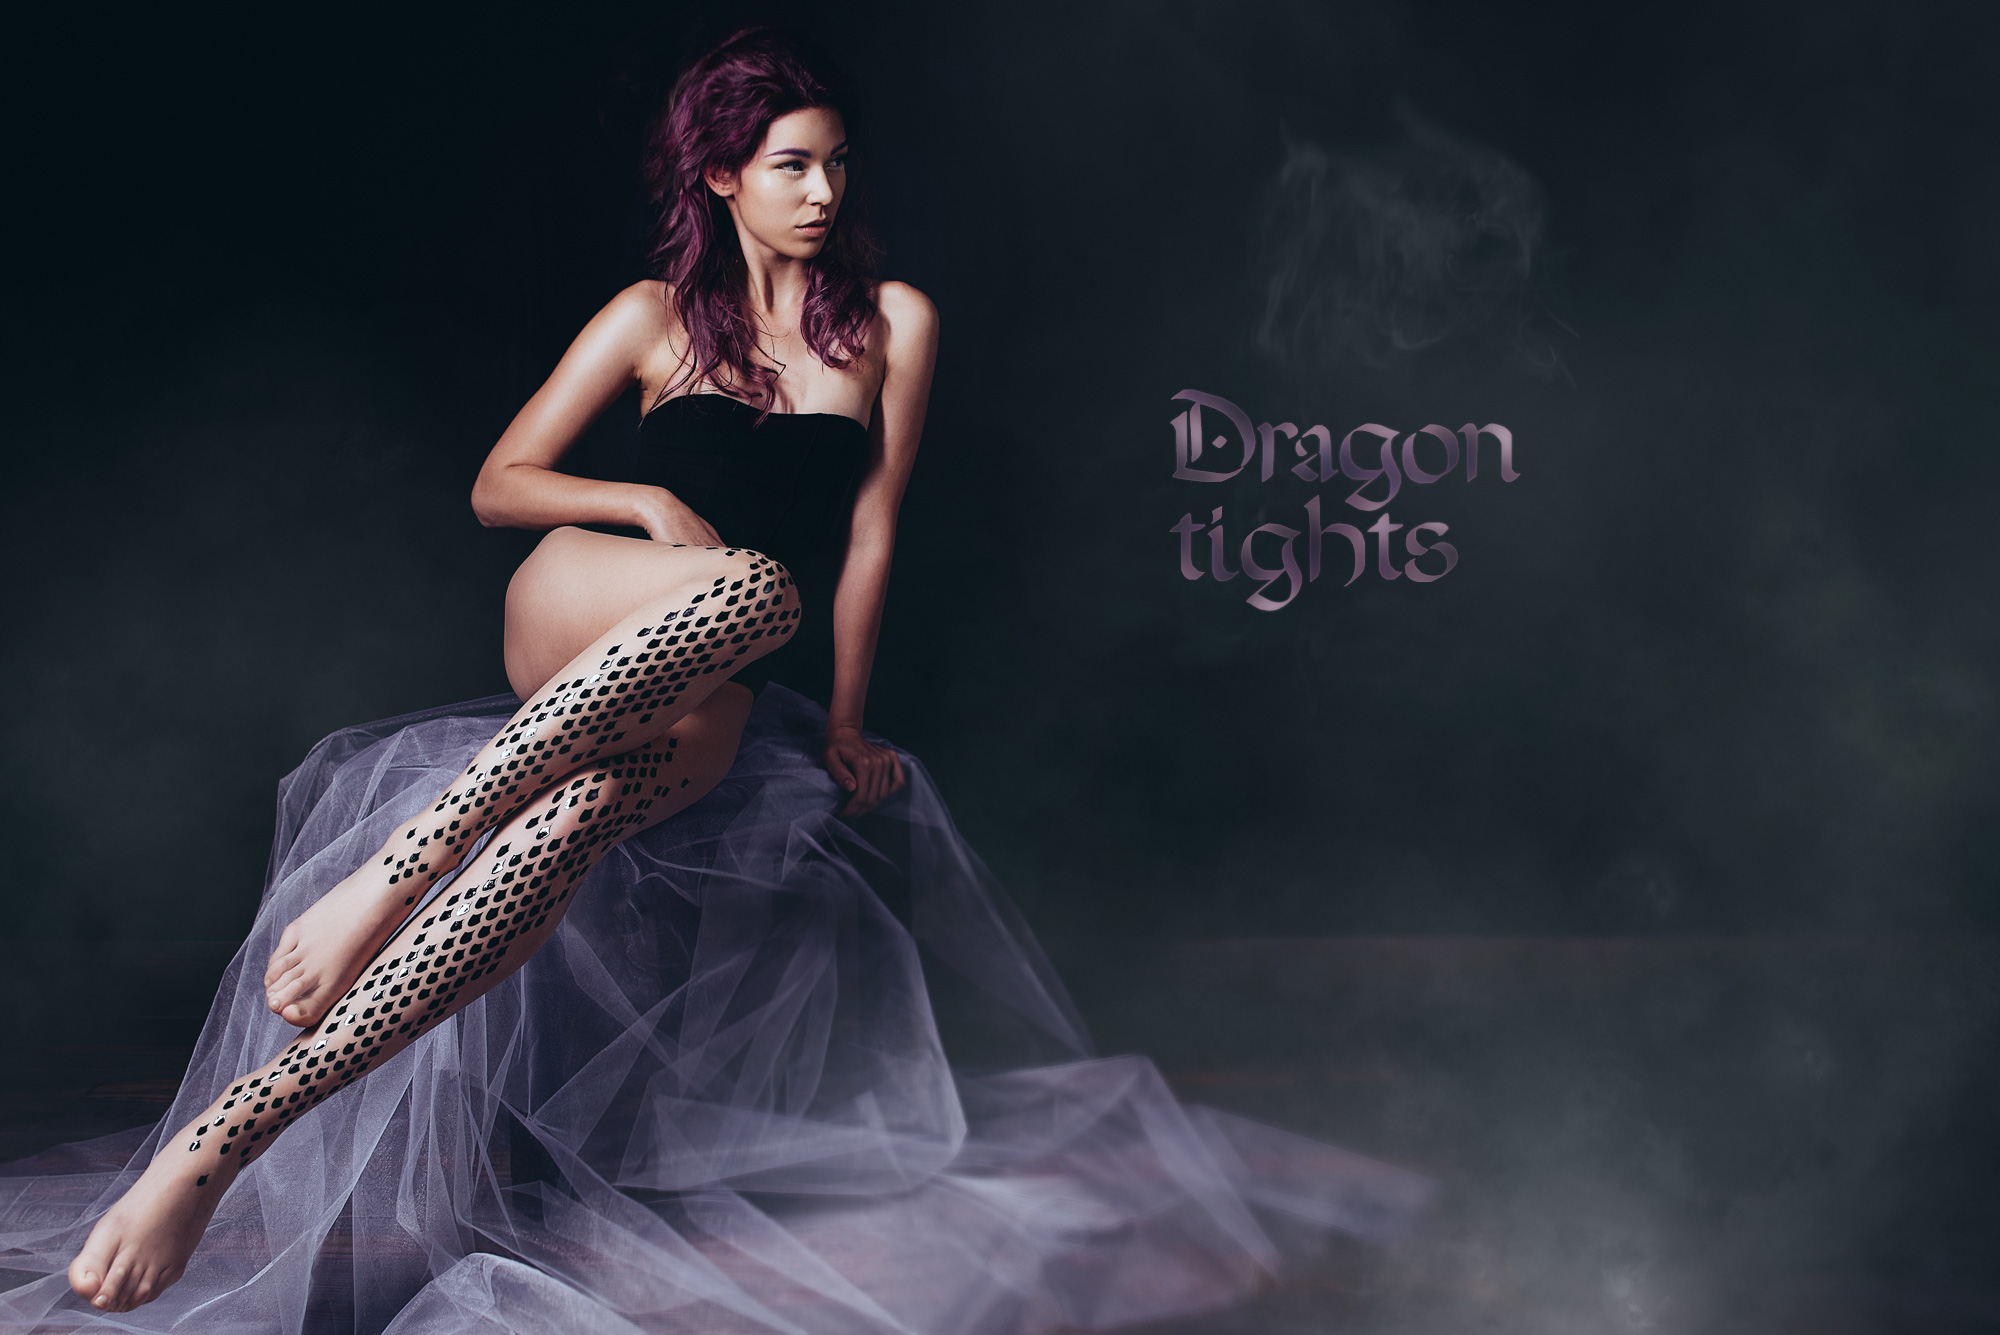 Dragon tights by Virivee